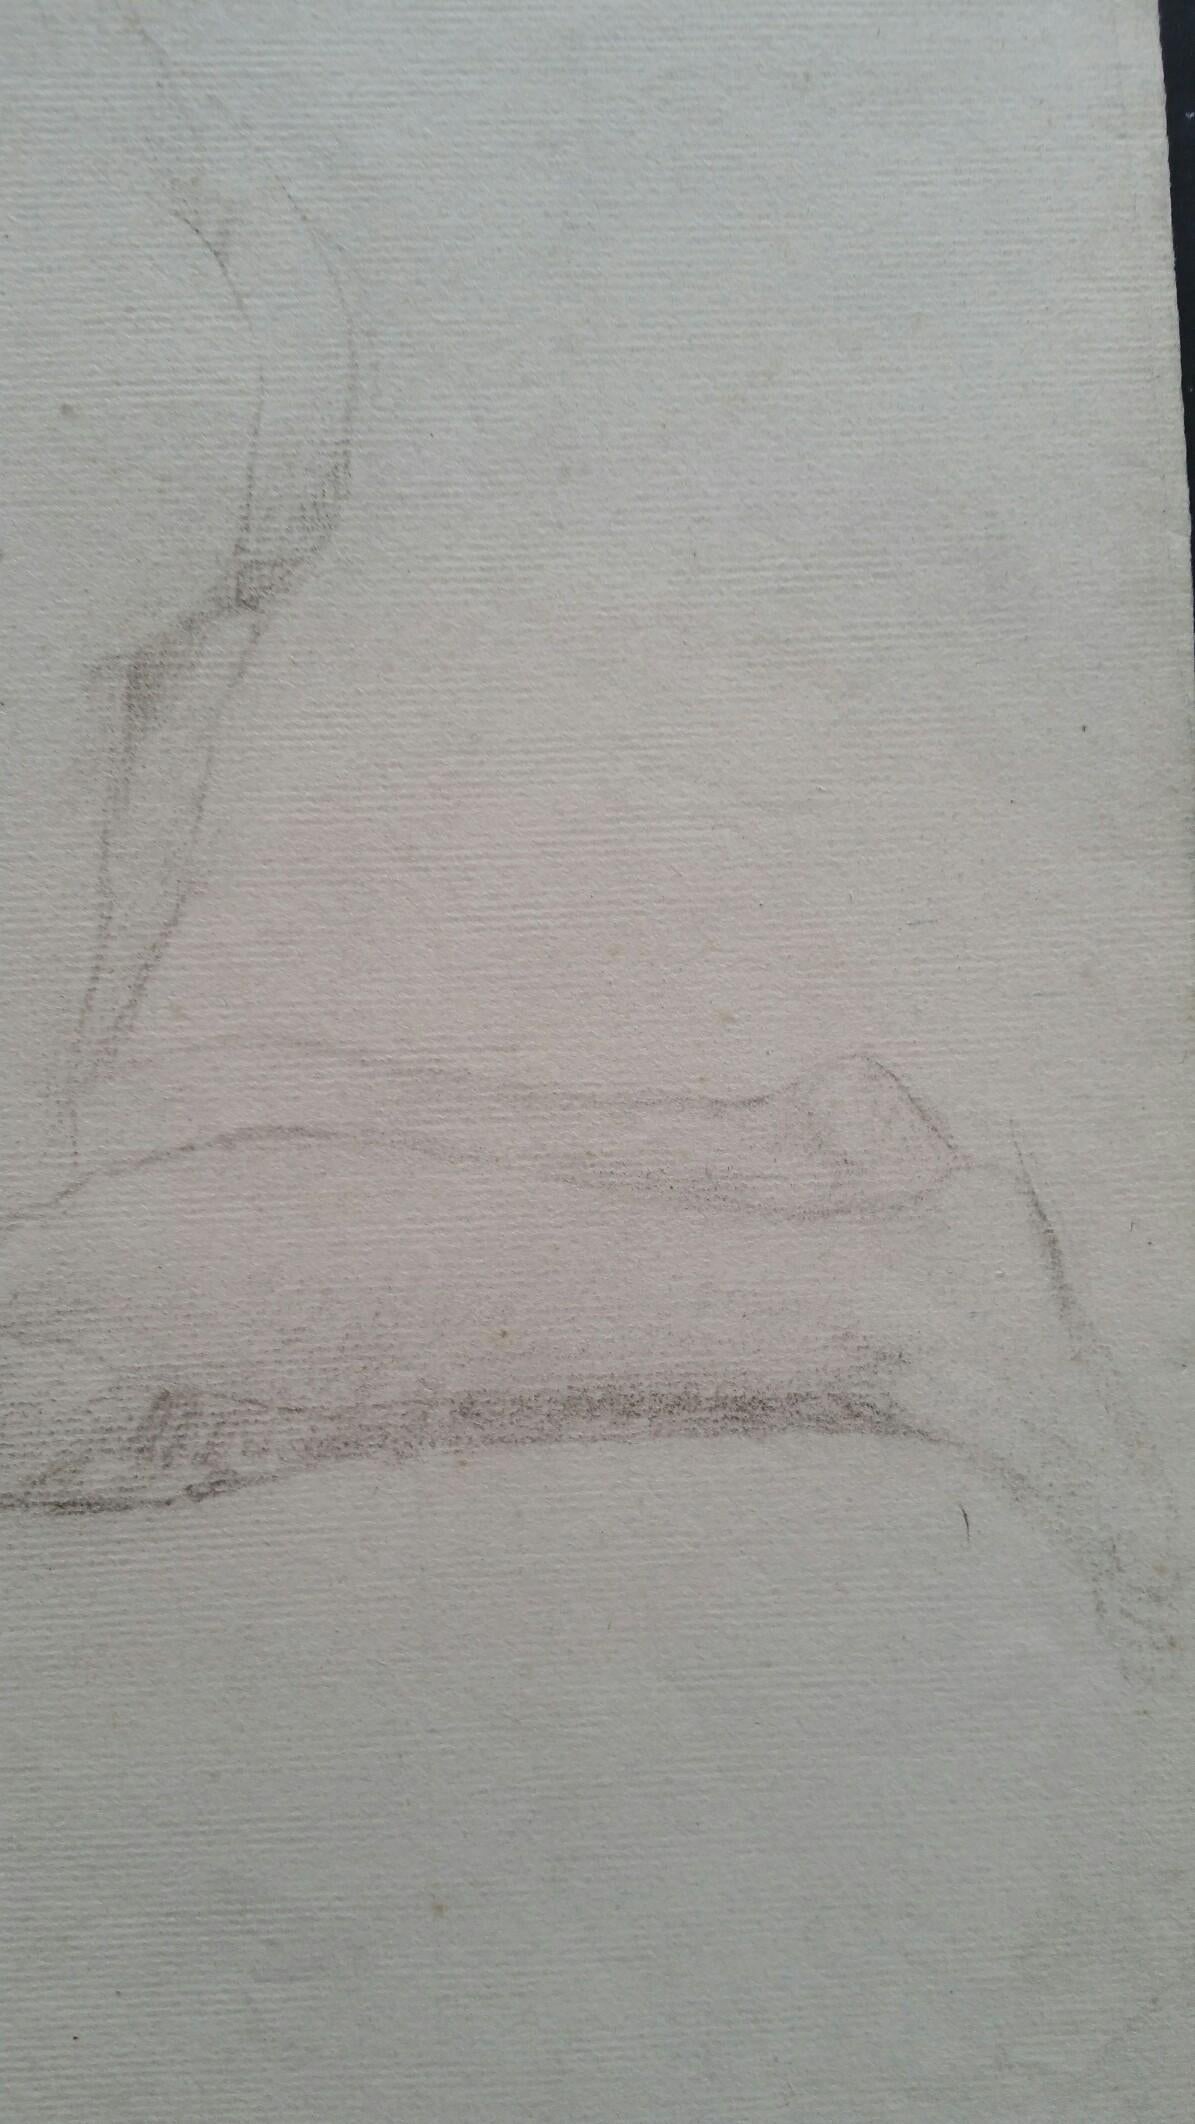 English Graphite Portrait Sketch of Female Nude, Kneeling For Sale 1